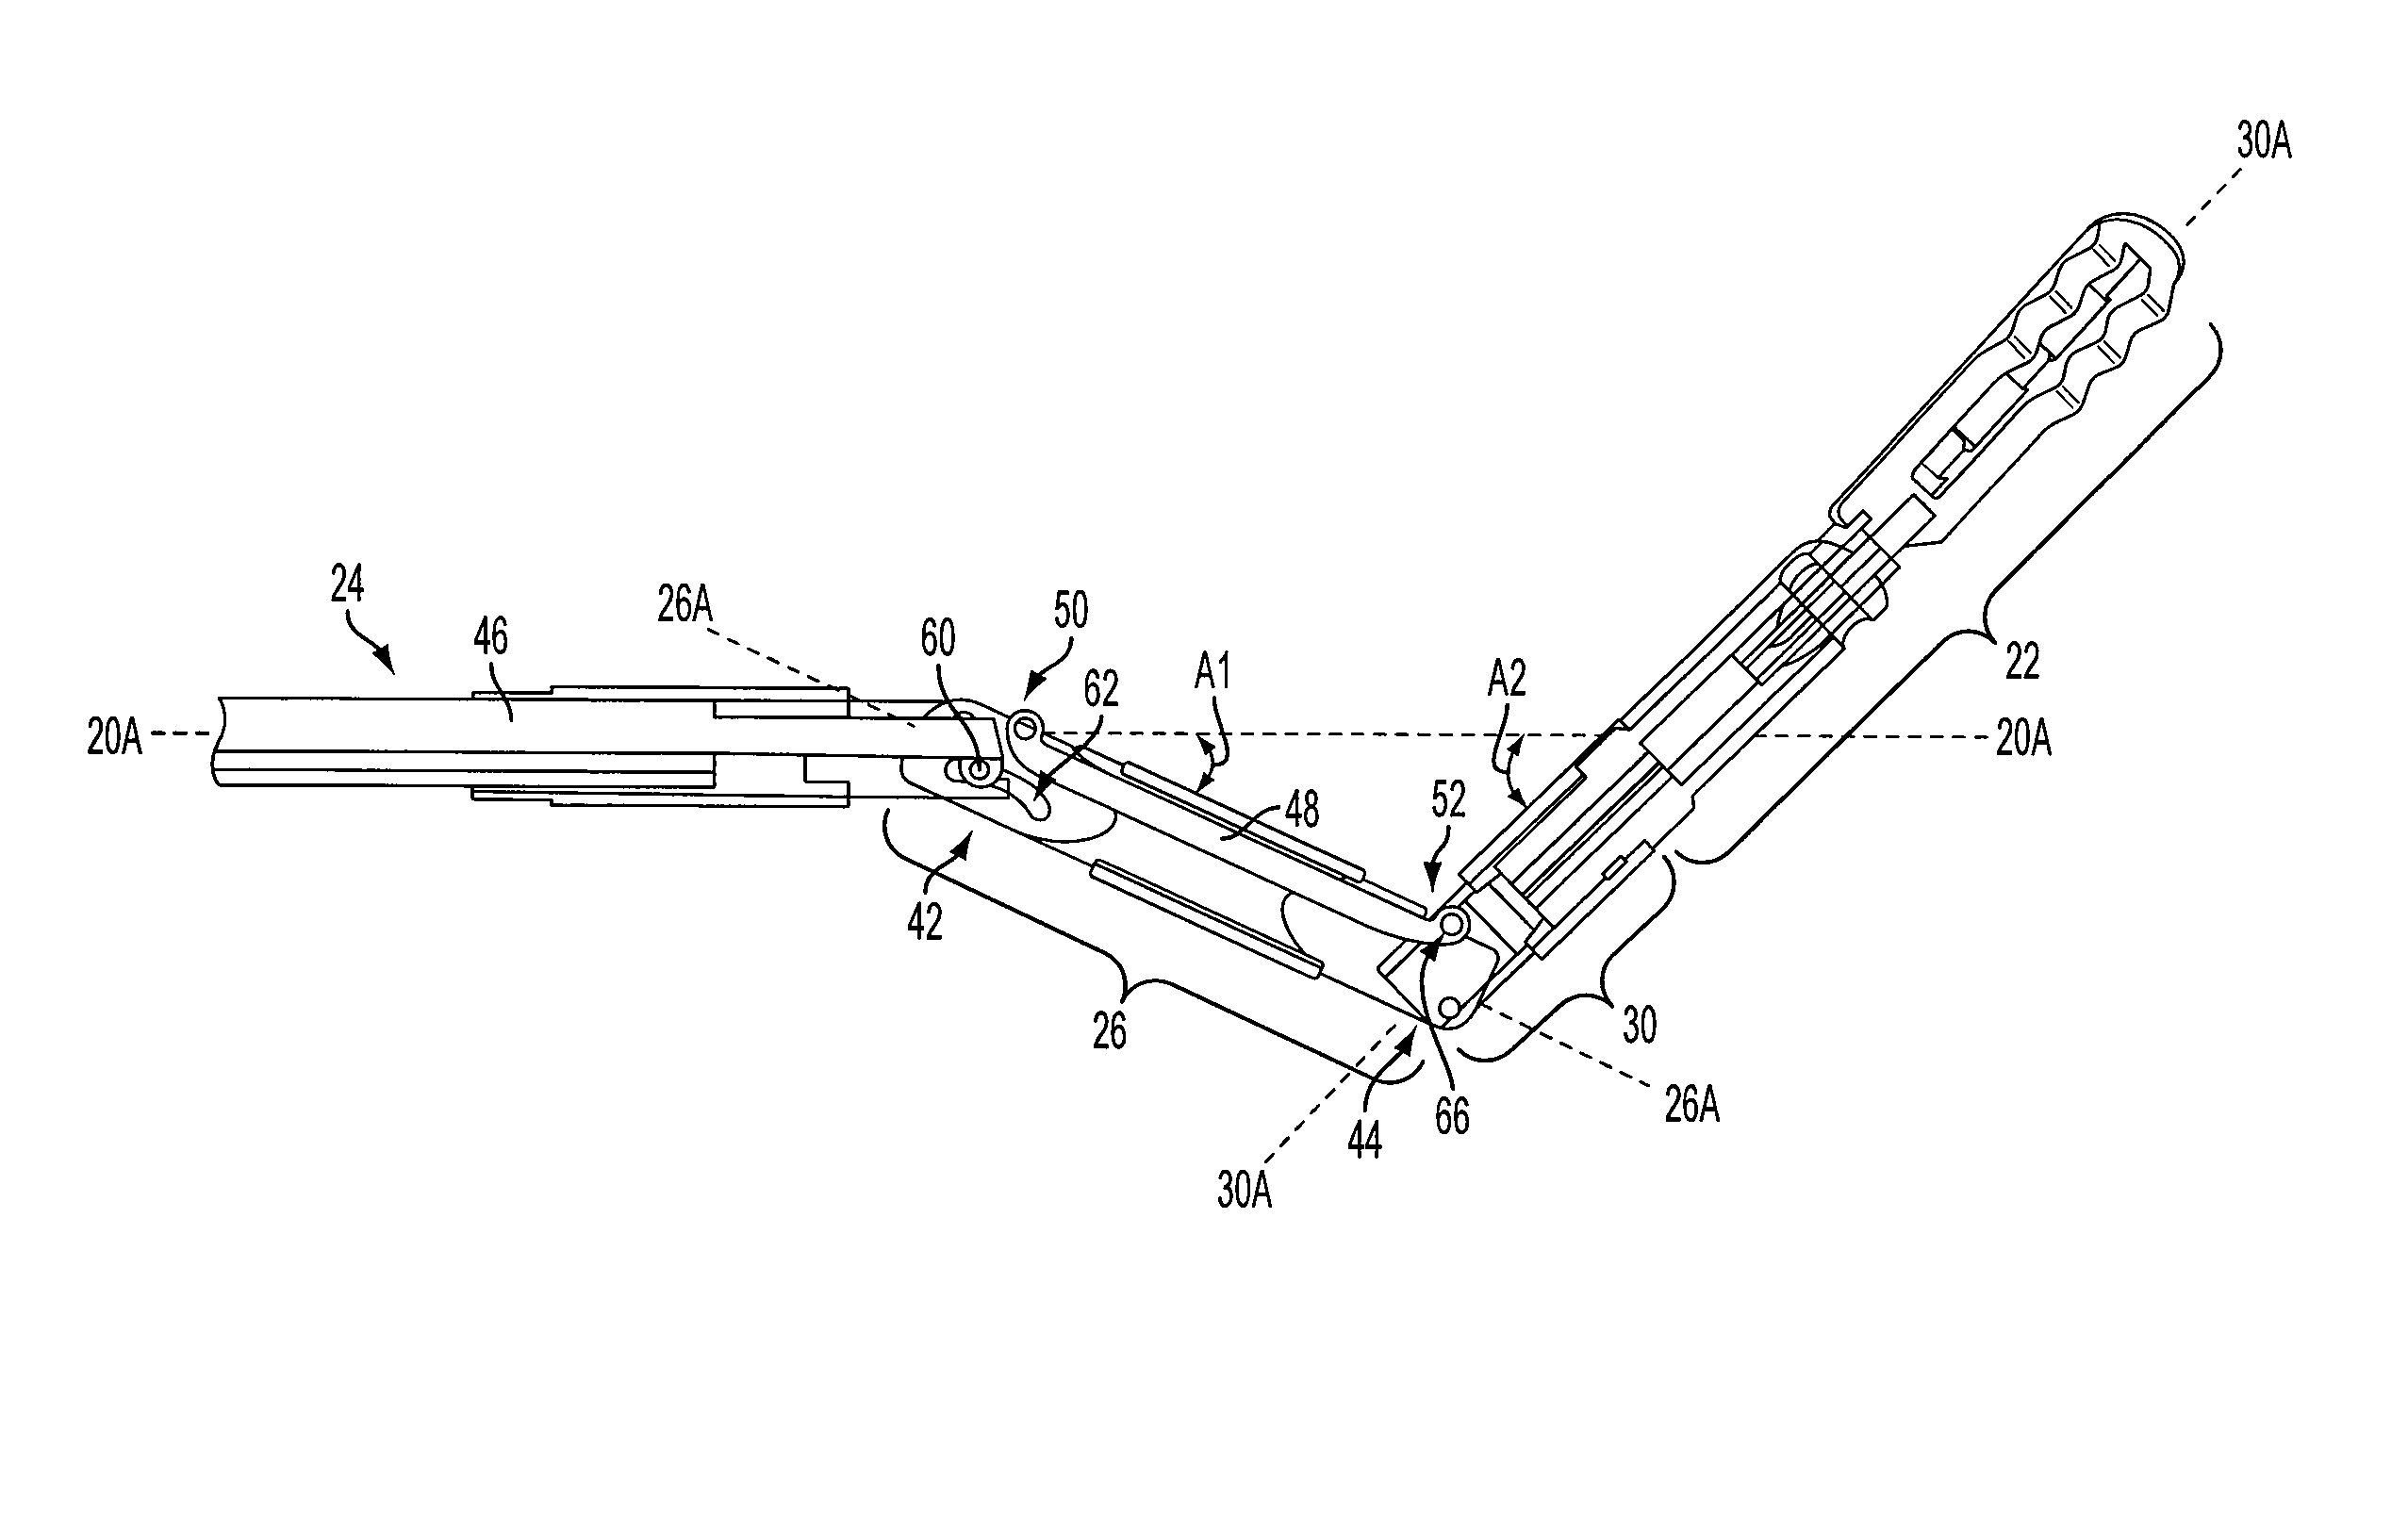 Laparoscopic device with compound angulation